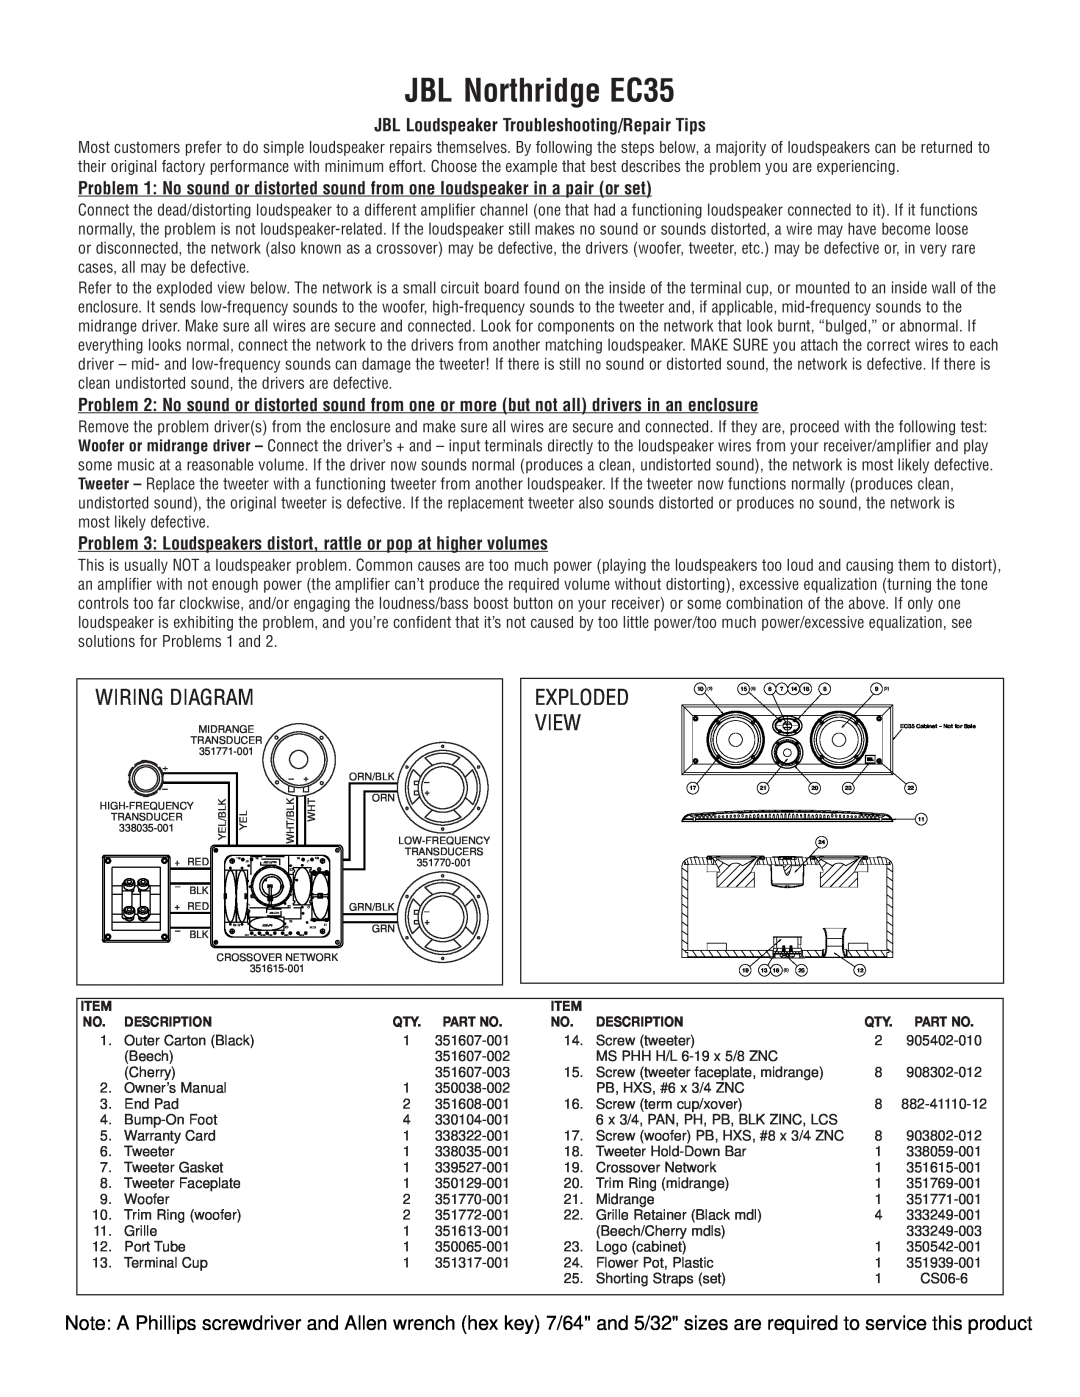 JBL owner manual JBL Northridge EC35, View, Wiring Diagram, Exploded 